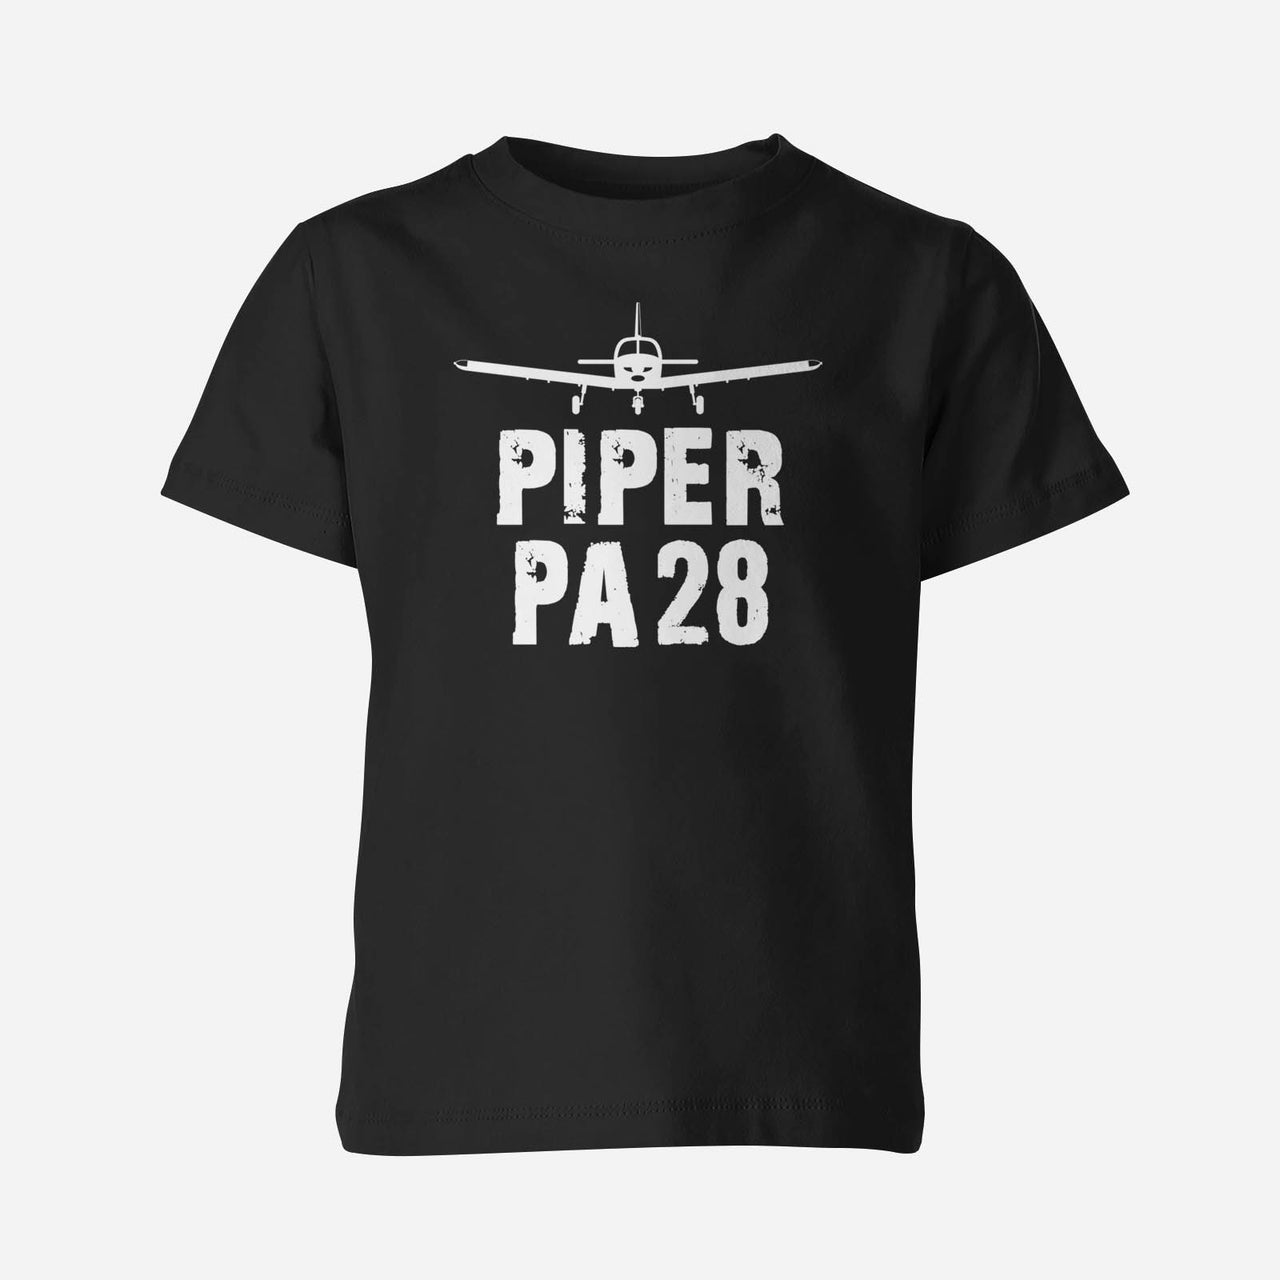 Piper PA28 & Plane Designed Children T-Shirts